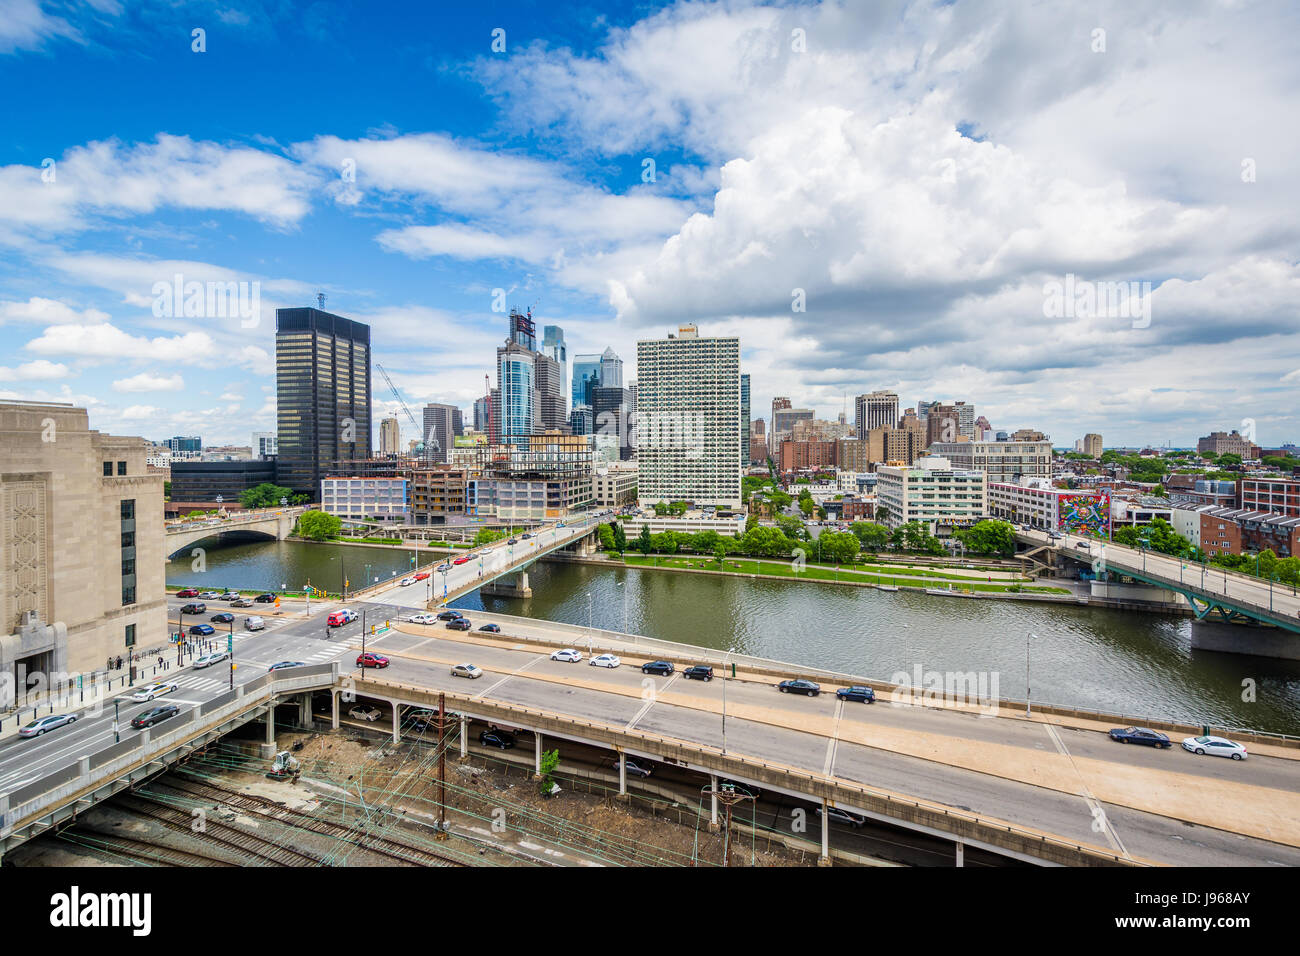 View of the Schuylkill River and skyline of Philadelphia, Pennsylvania. Stock Photo